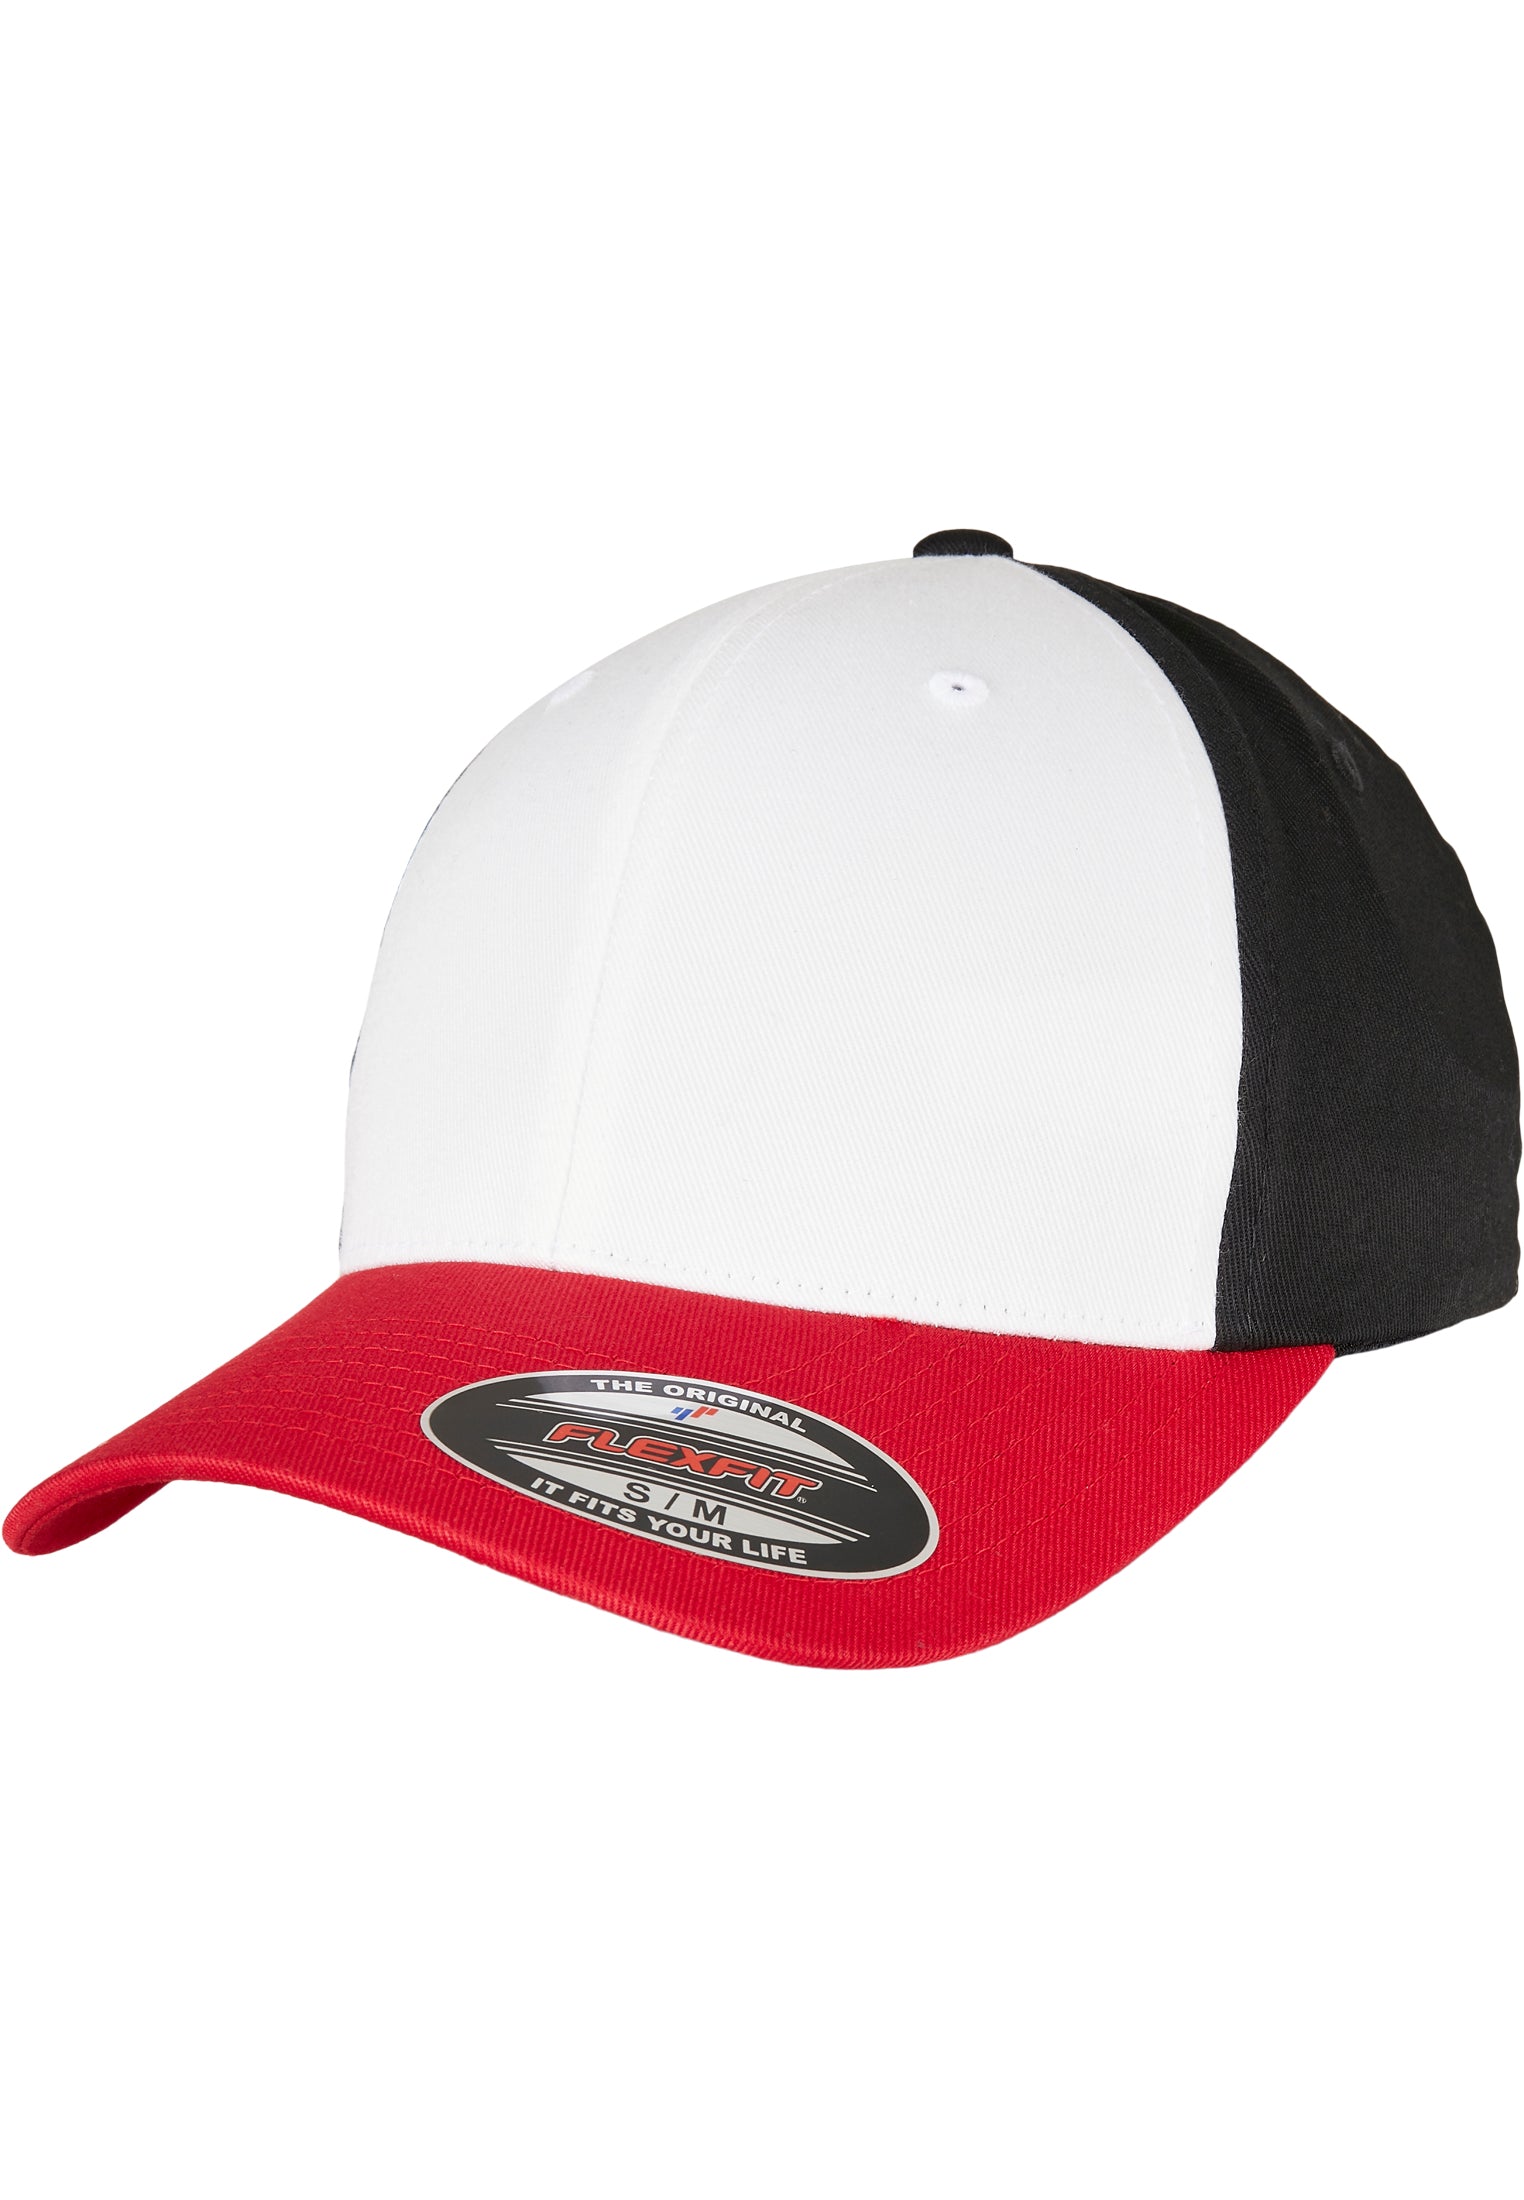 Caps TONE 3 Flexfit WOOLY COMBED Red/White/Black 6277TT CAP